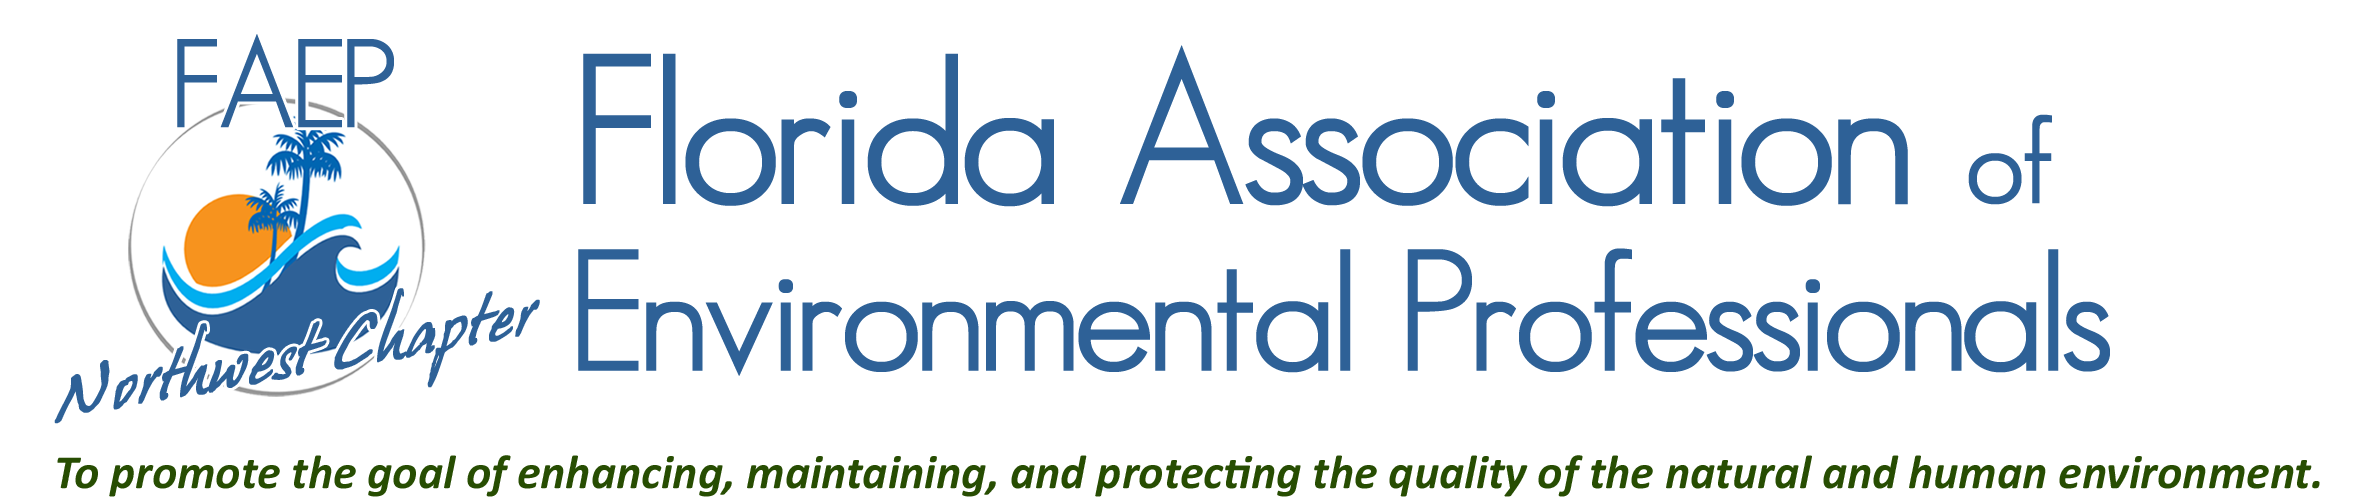 Florida Association of Environmental Professionals – Northwest Chapter